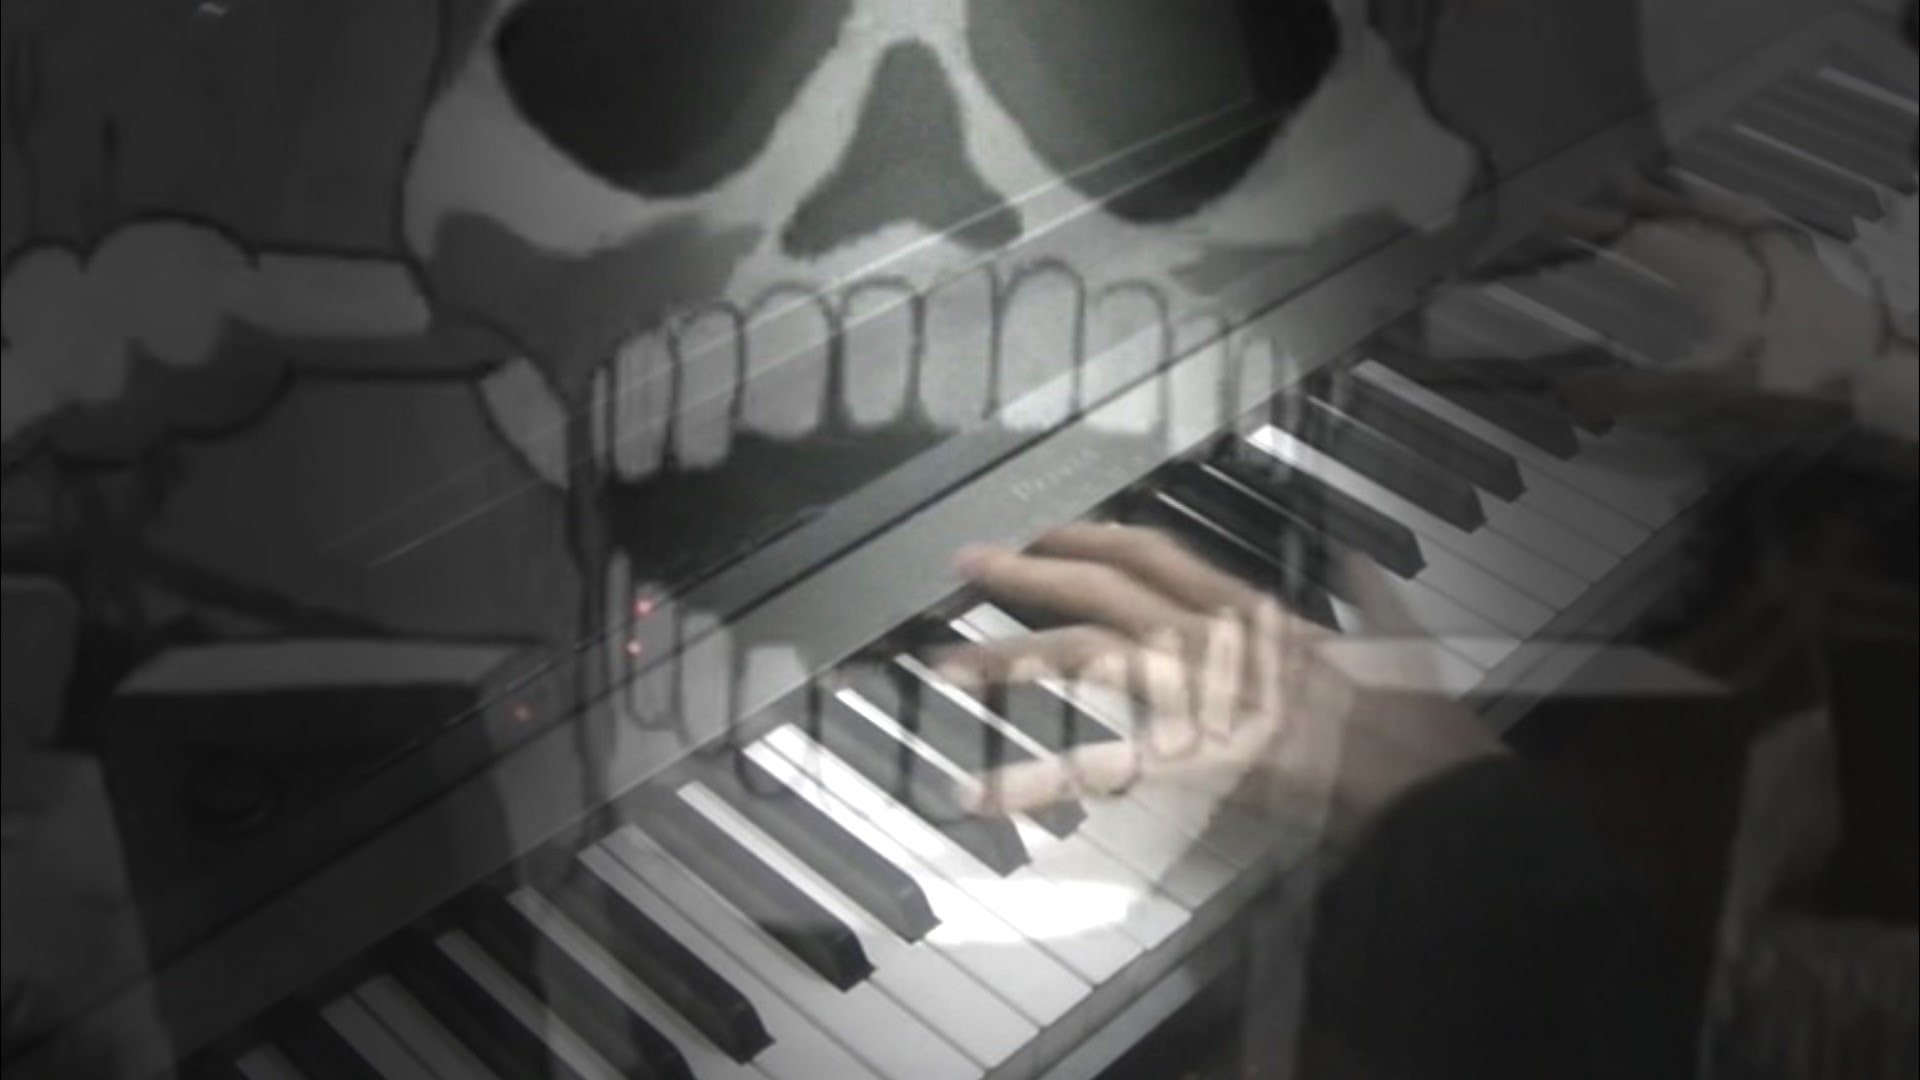 СПУКИ скэри скелетон на пианино. The Living Tombstone Spooky Scary Skeletons. Spooky Scary Skeletons Living Tombstone's альбом. Скелет и черное пианино. Spooky scary remix